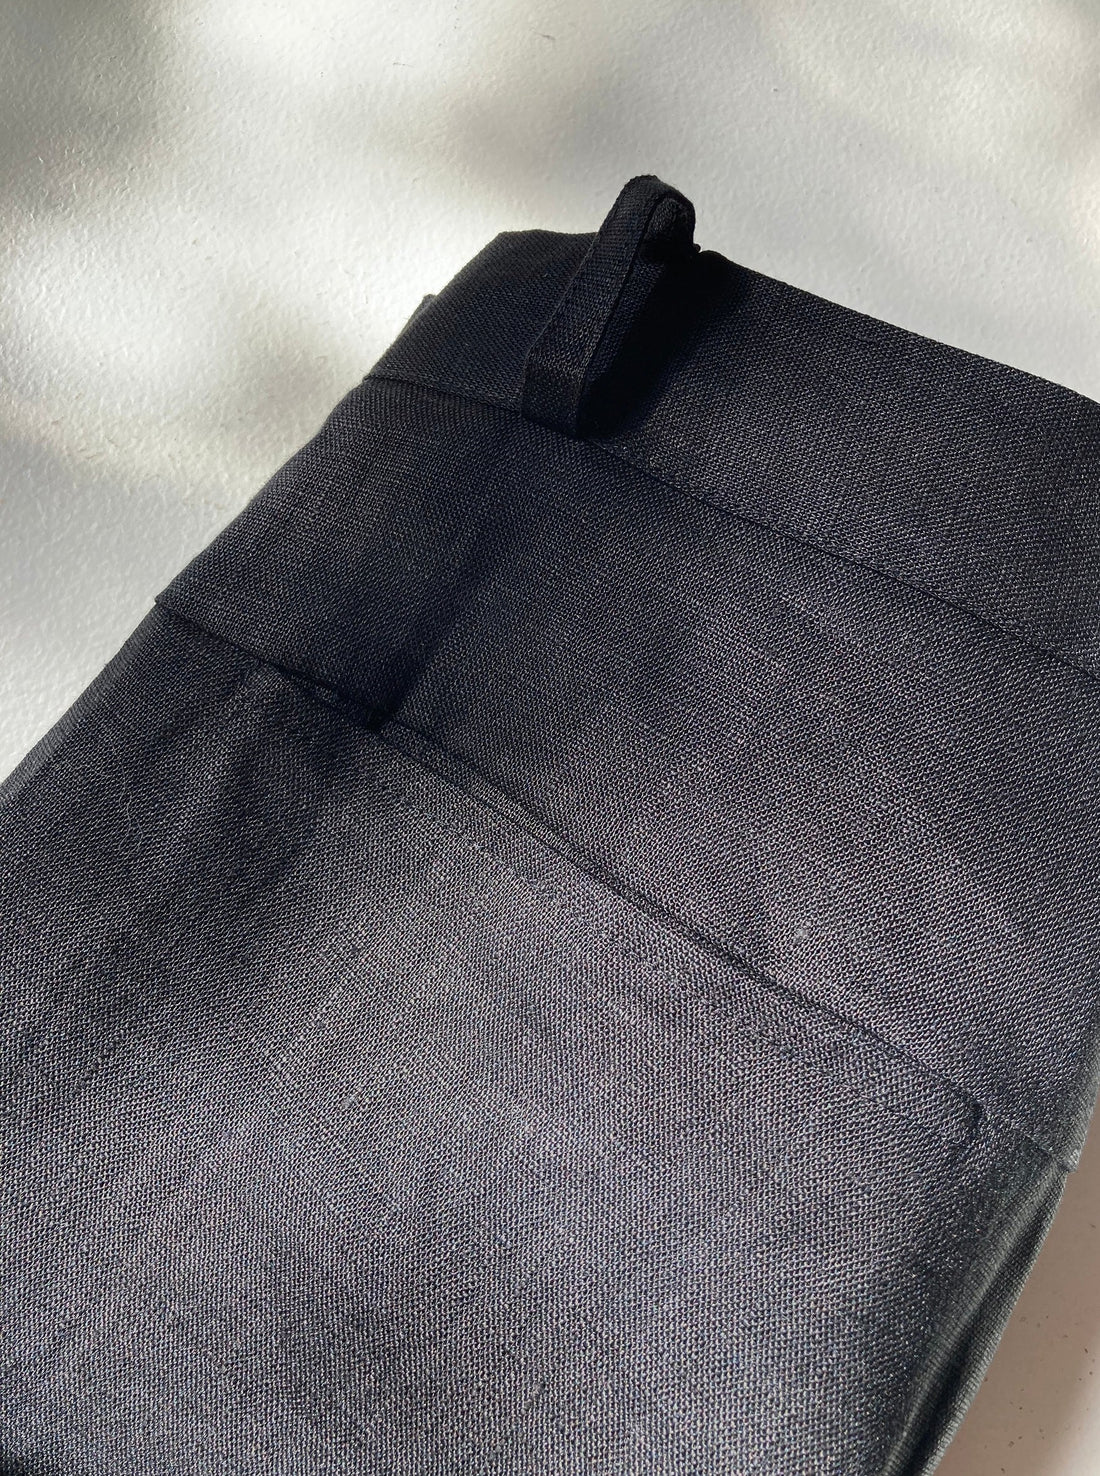 Pantalon de lin No6028m, noir